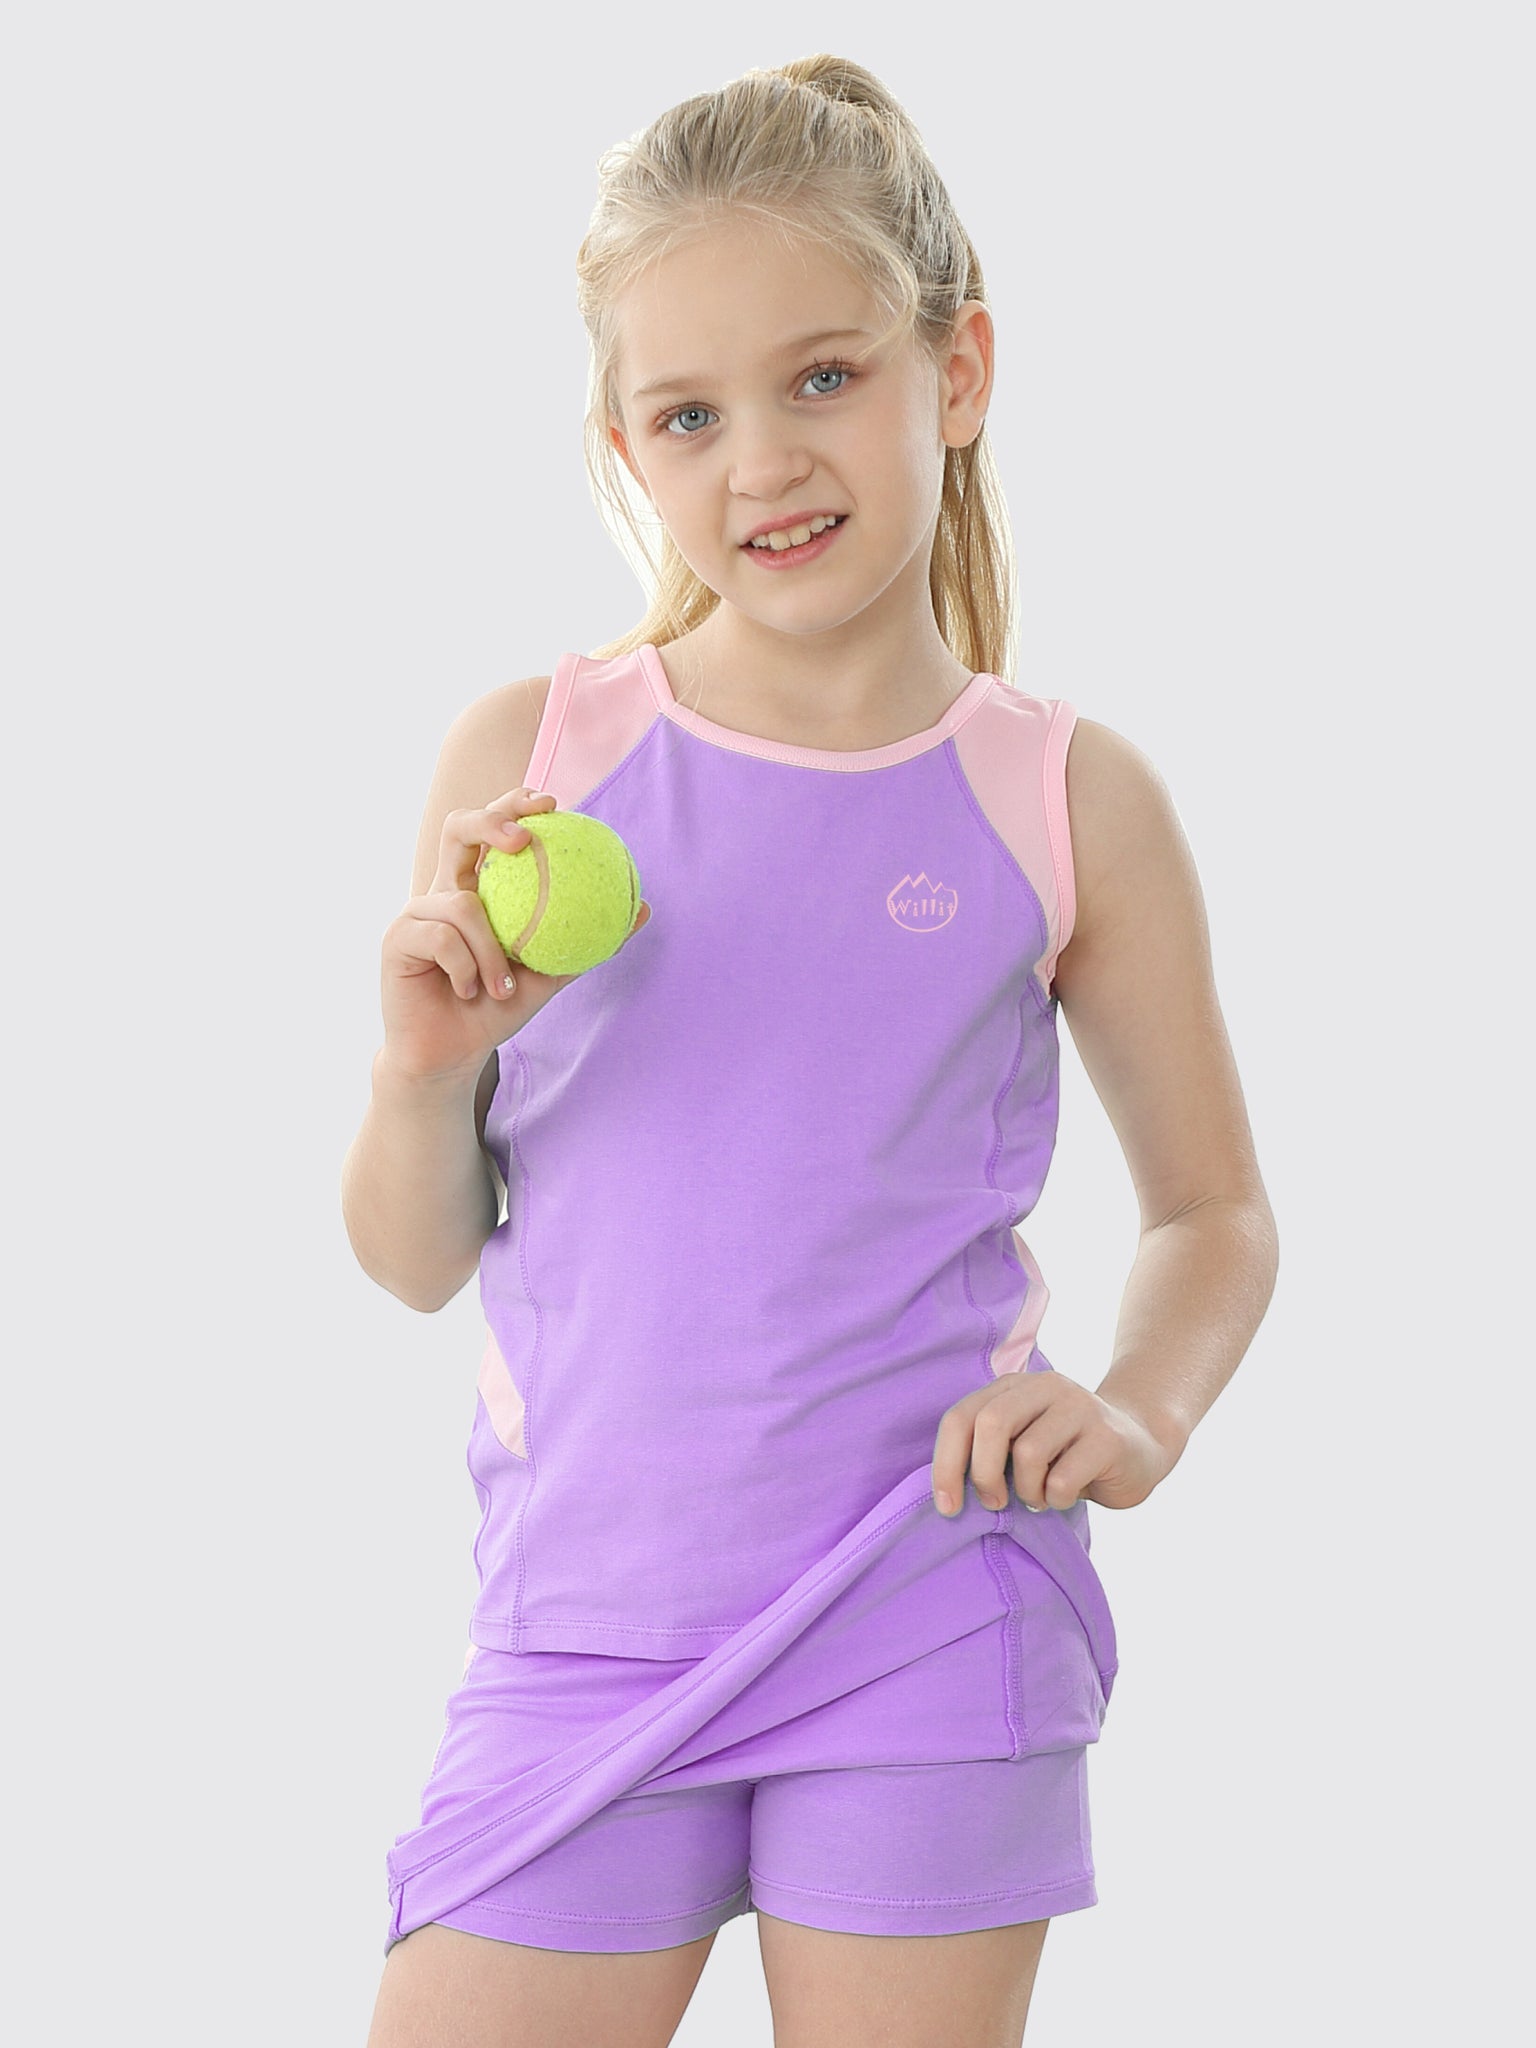 Willit Girls' Tennis Outfit_LightPurple_model4